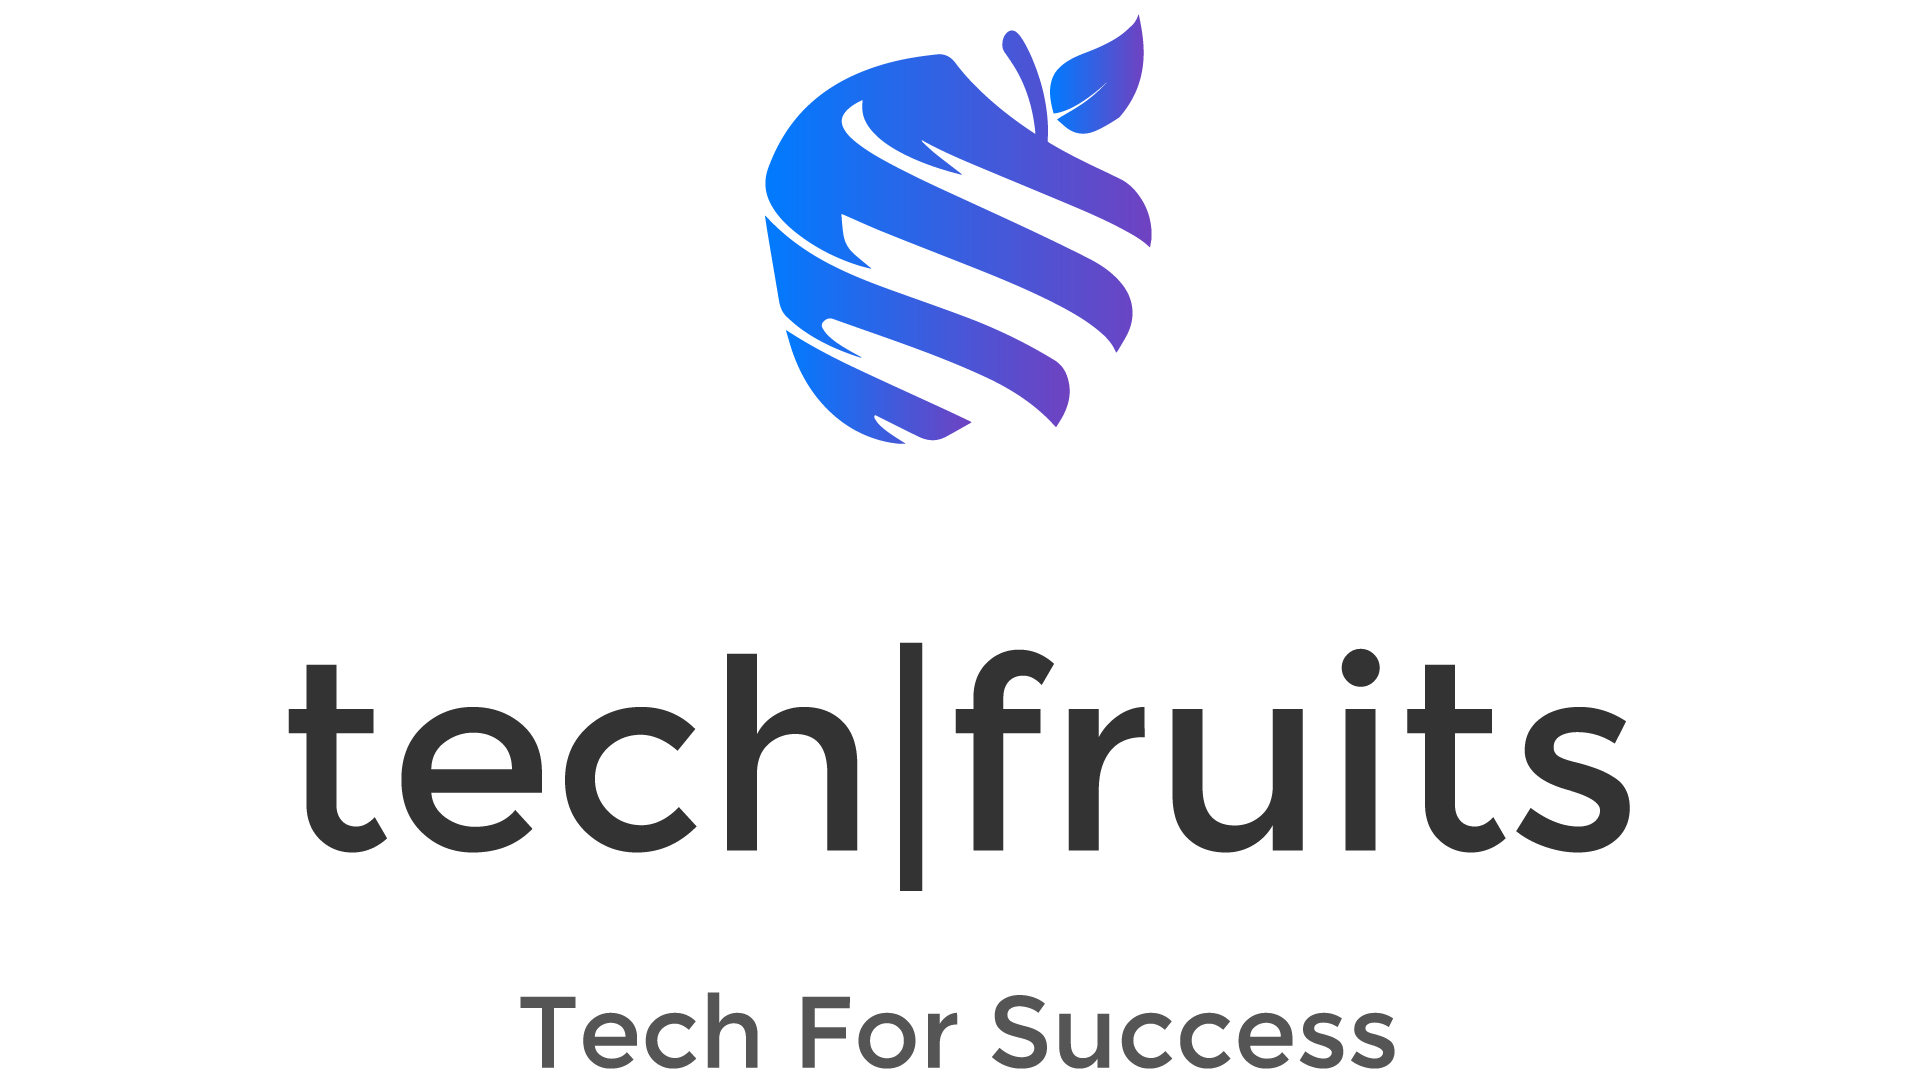 Techfruits IT Solutions new logo designed by Google's Gemini AI